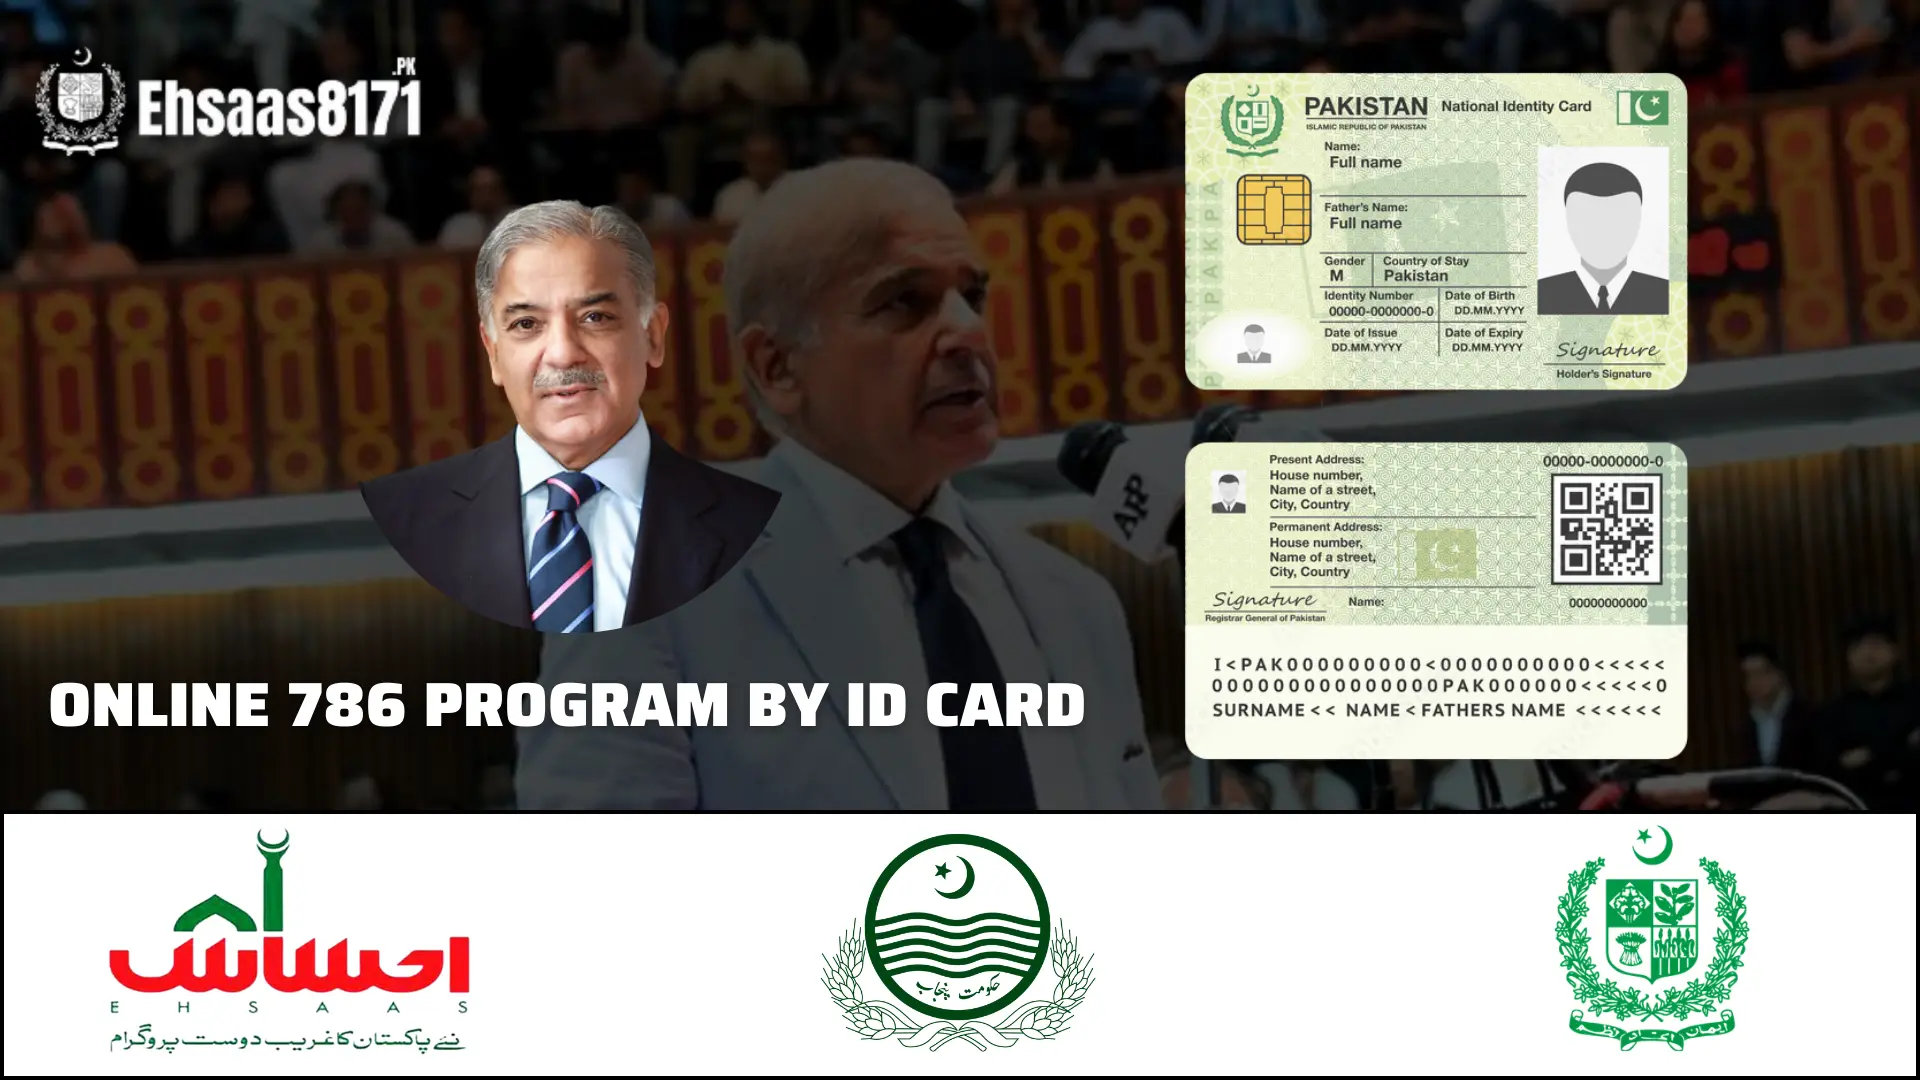 Online 786 Program by ID card